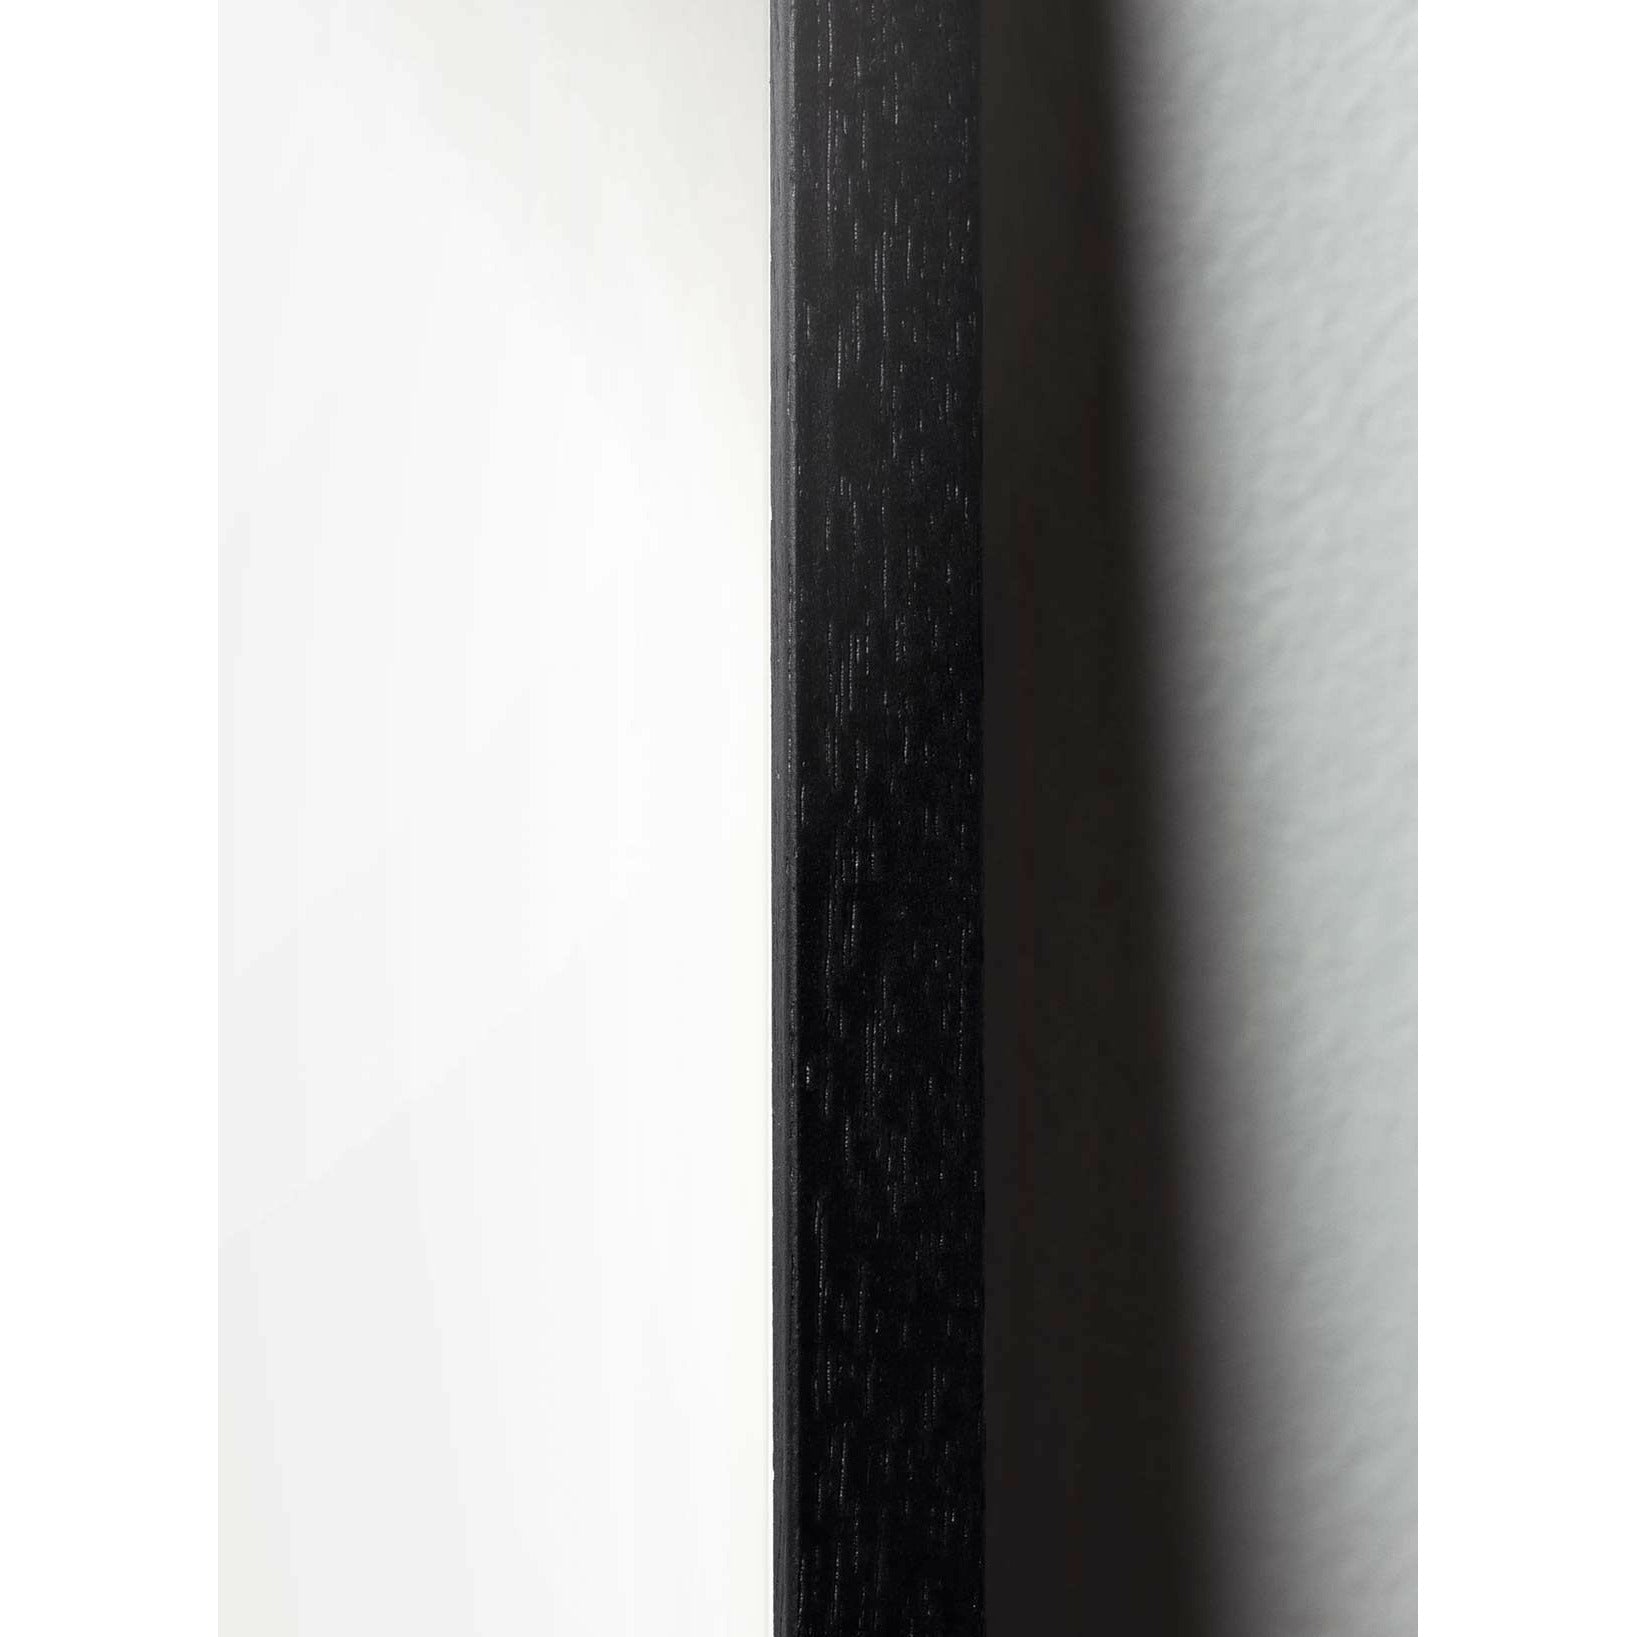 Póster de desfile de swan de creación, marco hecho de madera lacada negra, 50 x70 cm